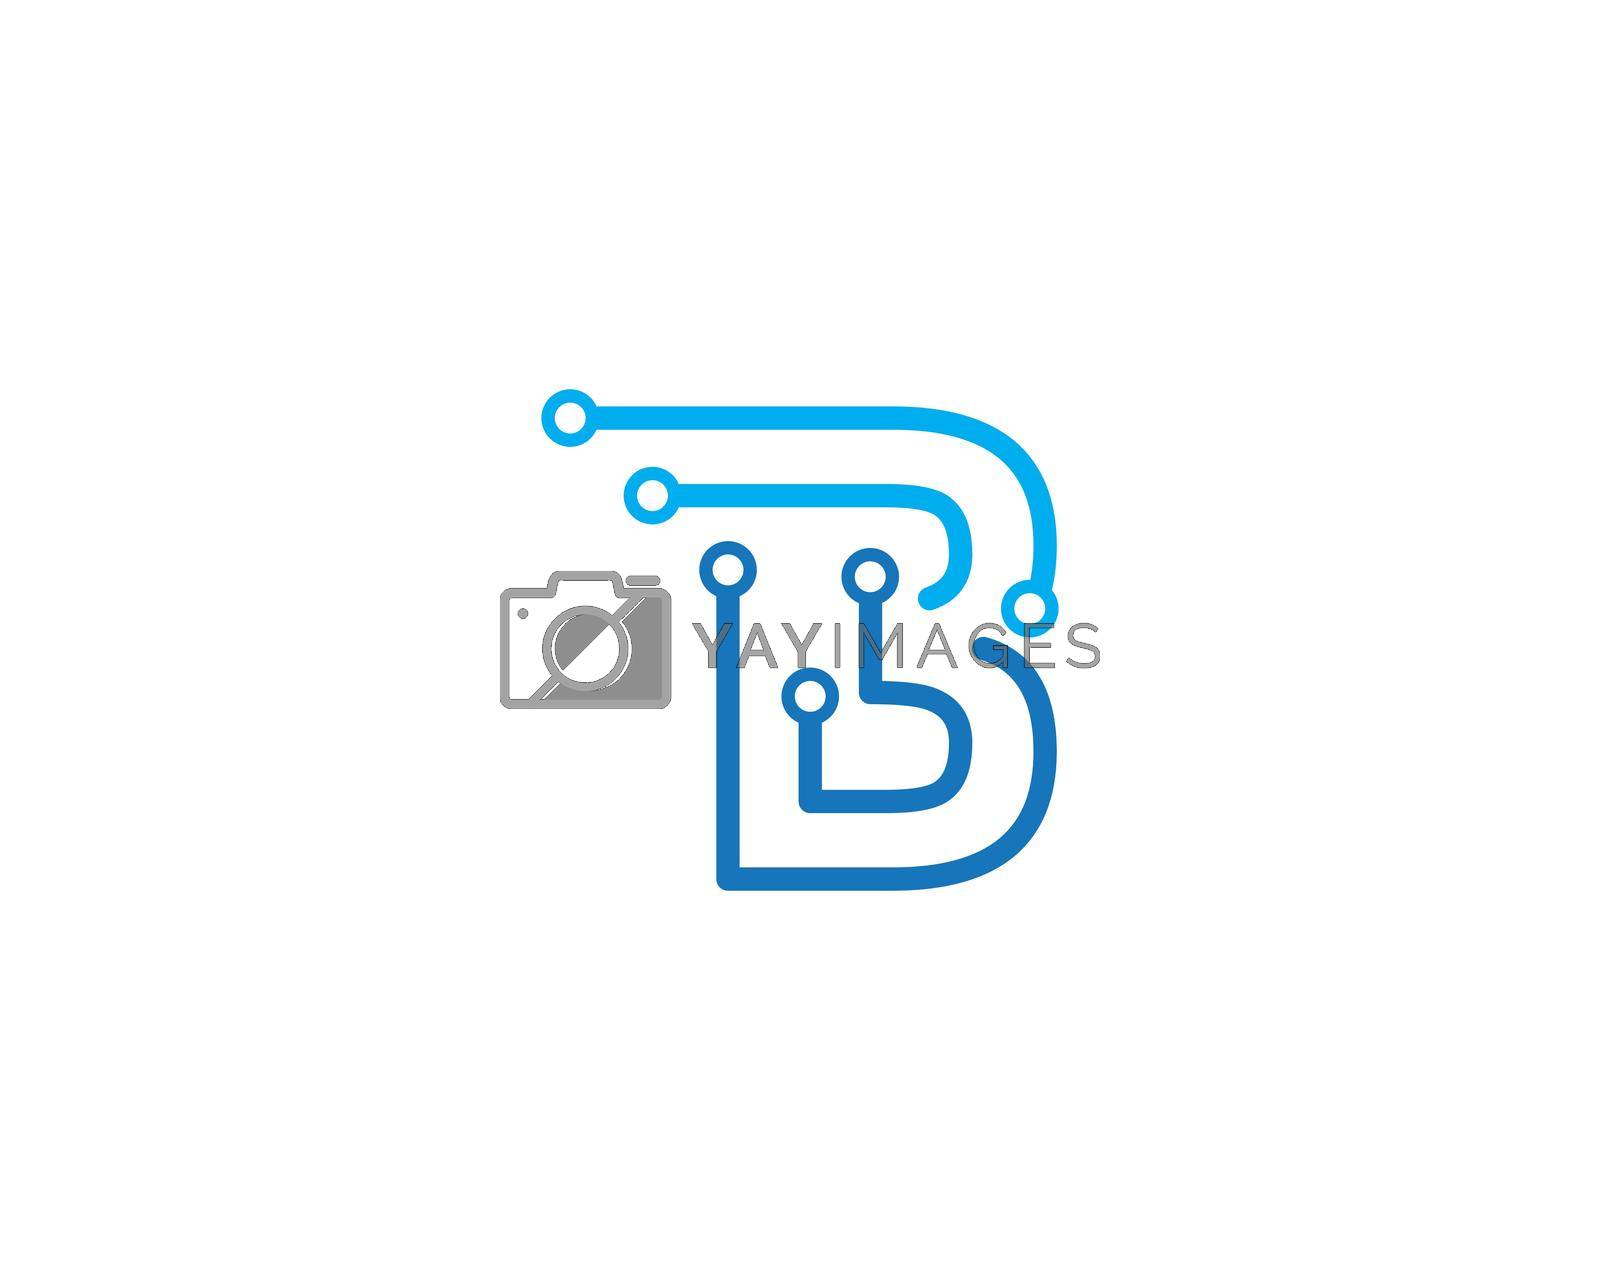 B letter circuit technology logo vector template